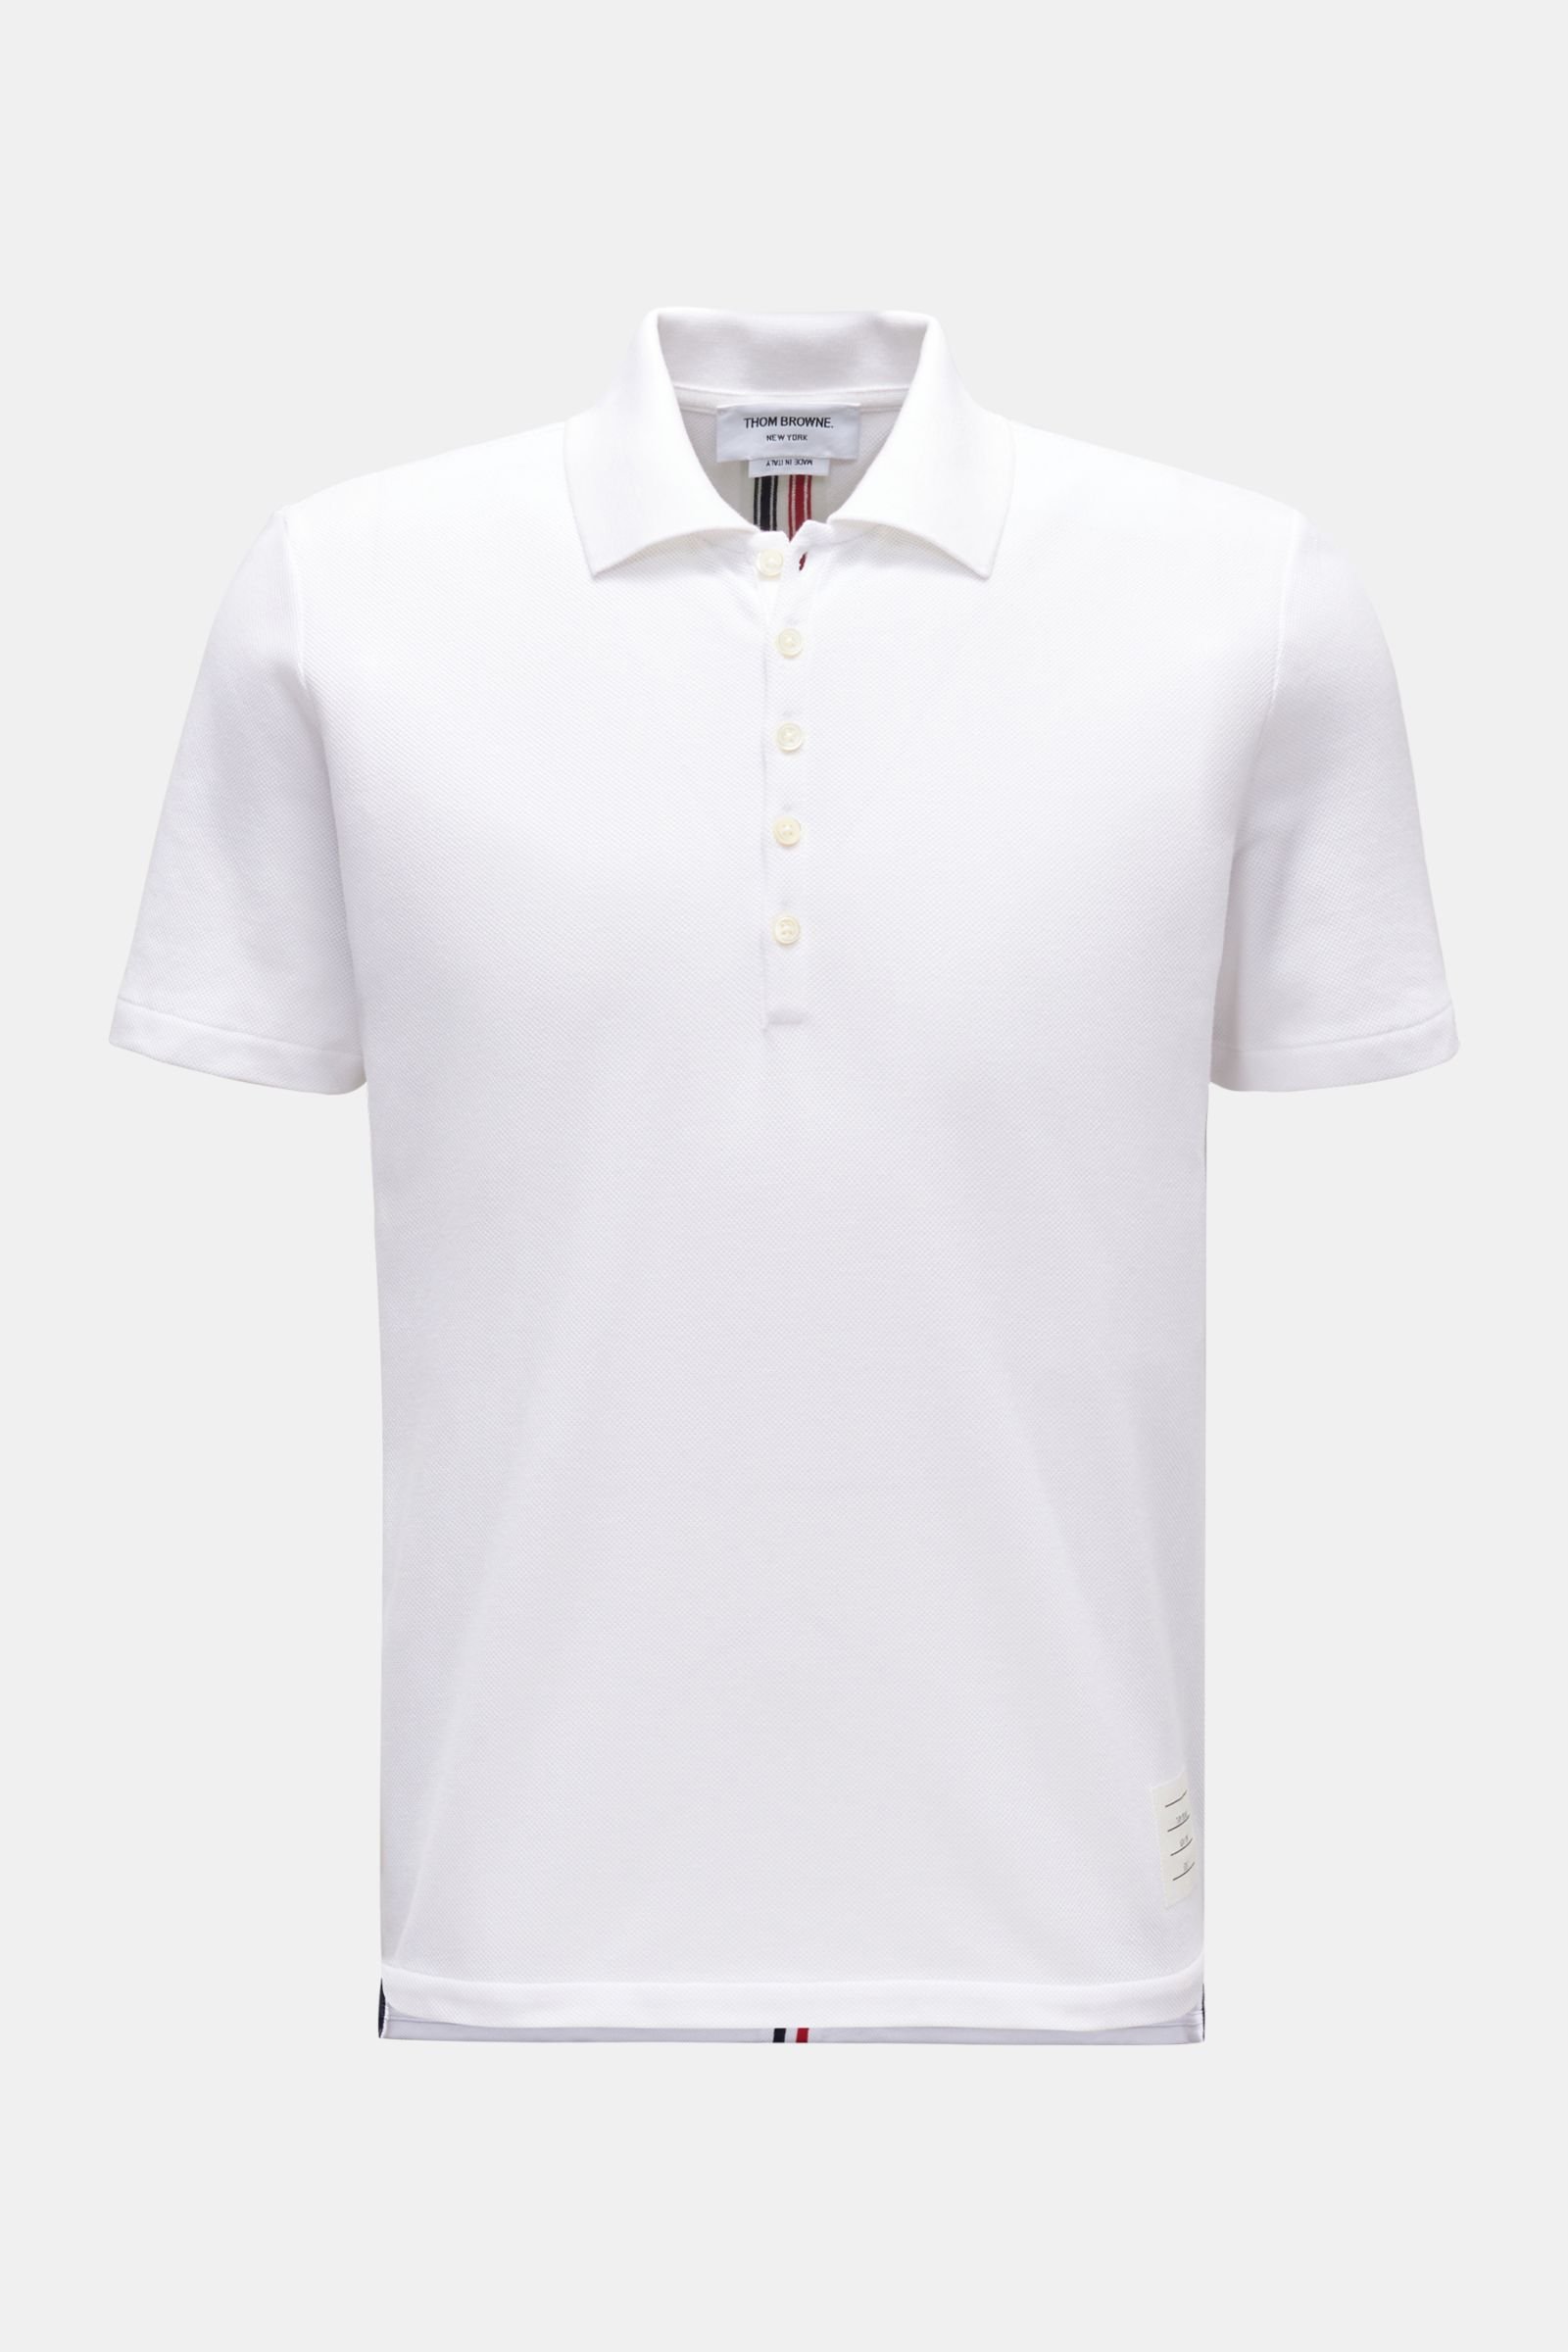 THOM BROWNE polo shirt white | BRAUN Hamburg